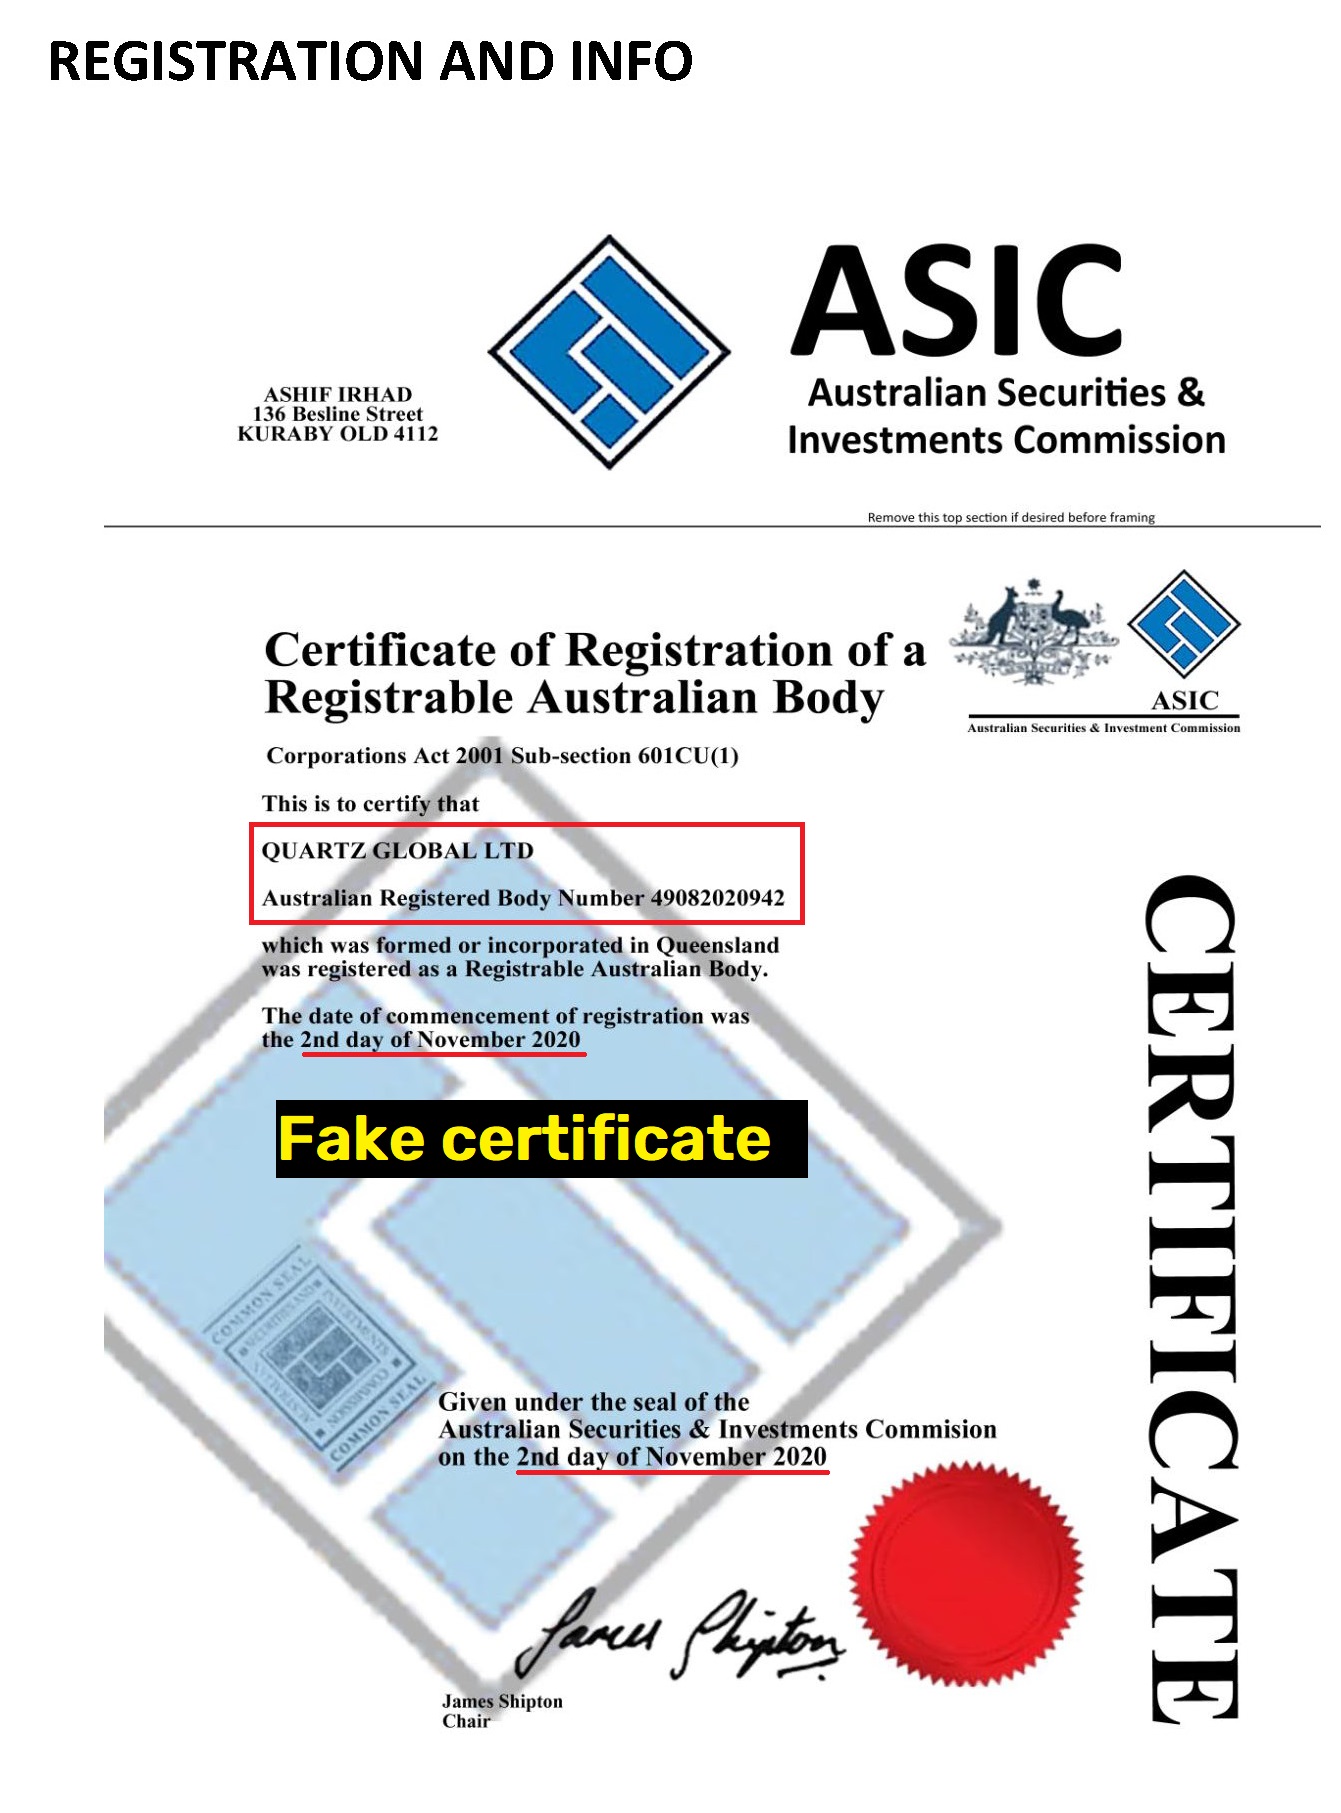 quartz global quartzglobal scam fake asic certificate